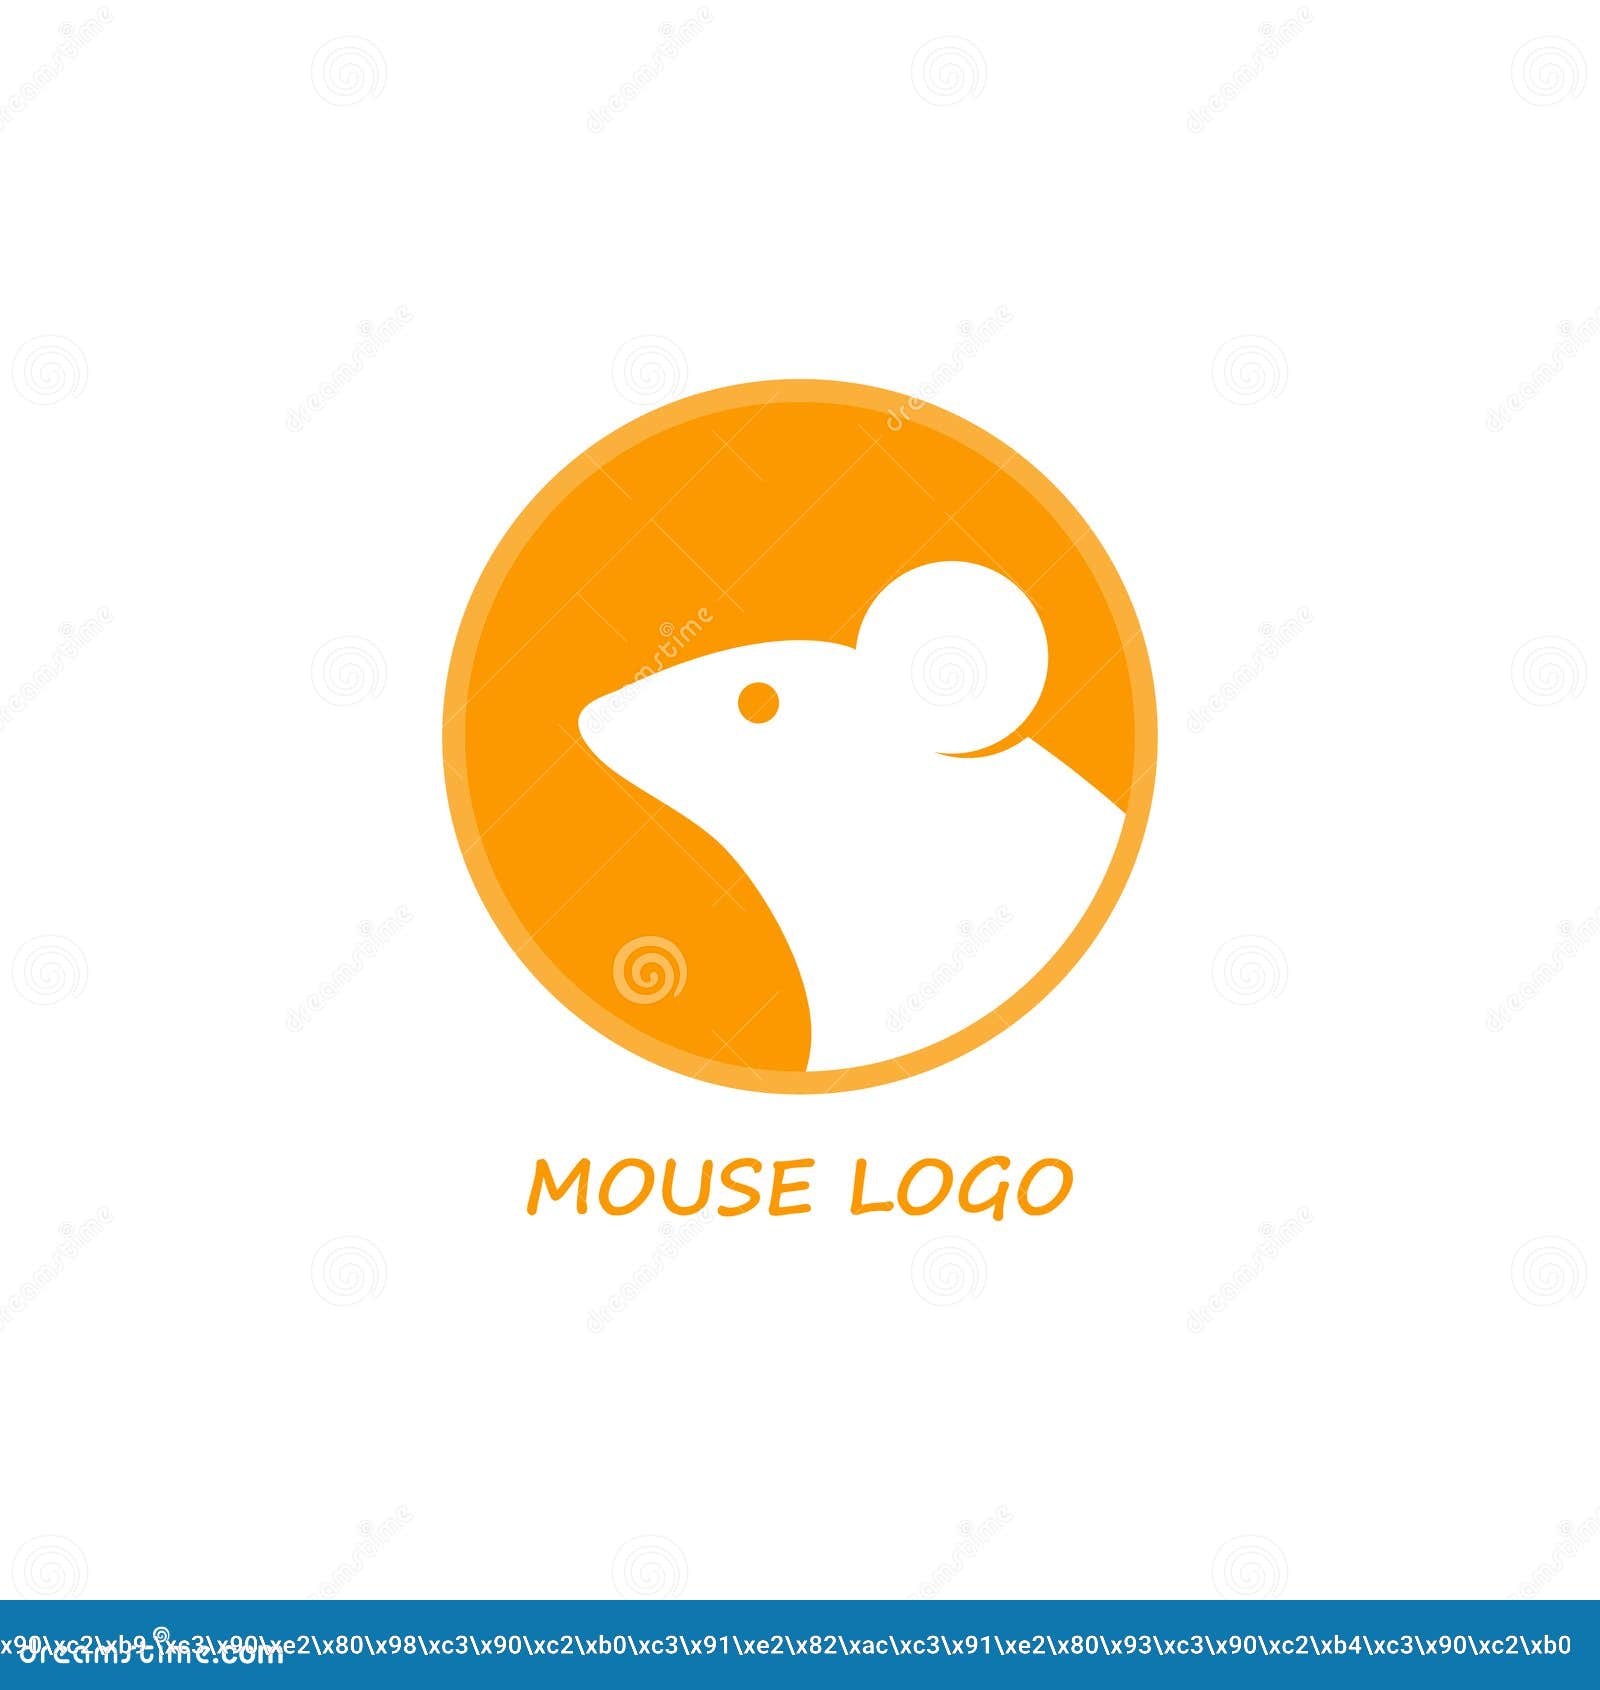 Mouse Logo Design Template Vector Illustration Isolated On The White Background Stock Vector Illustration Of Little Kanji